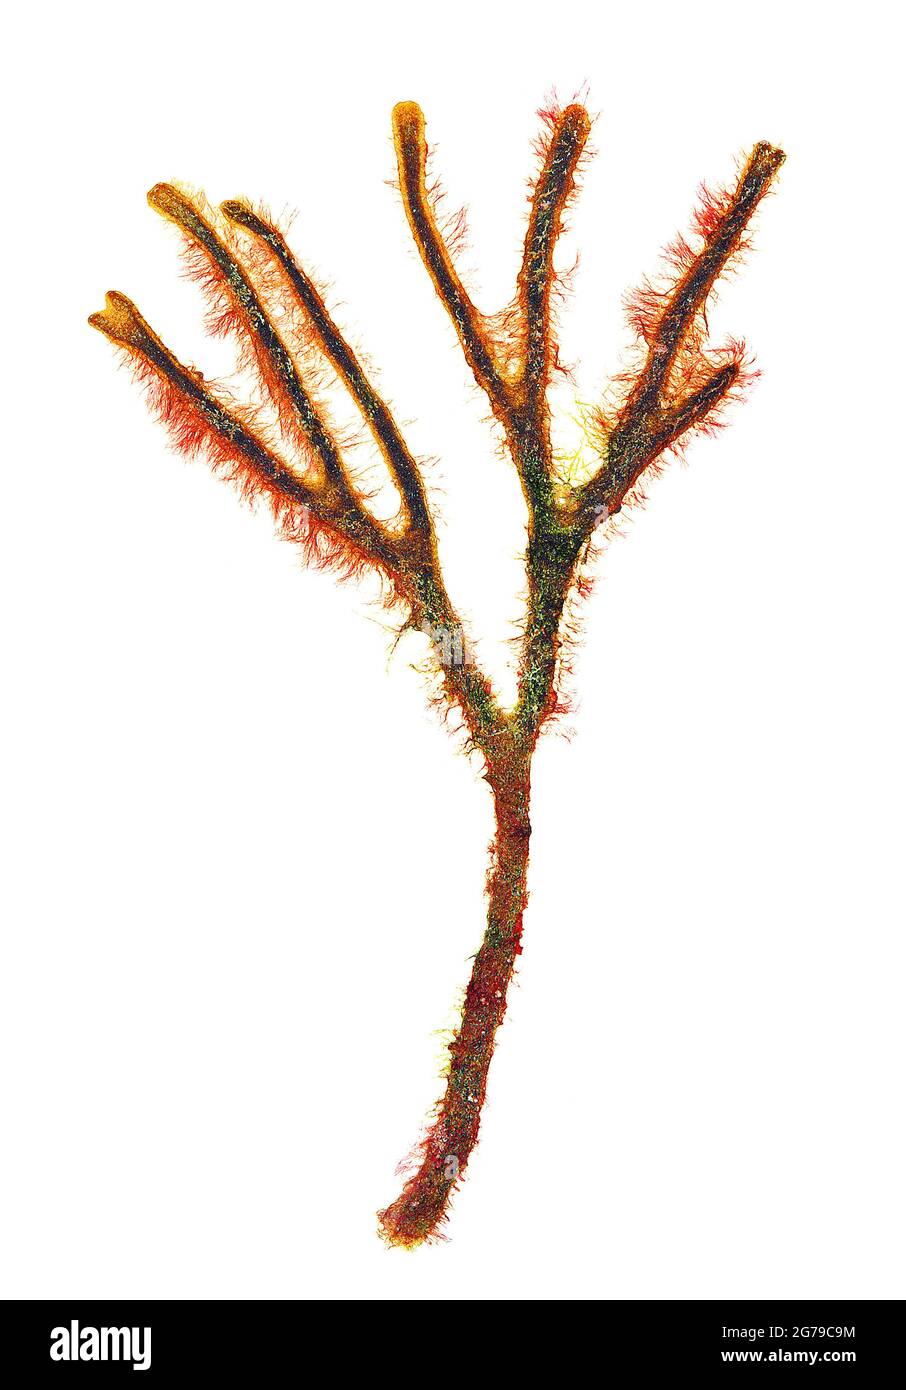 Acrochaetium secundatum (Lyngbye) Nägeli in Nägeli & Cramer, red alga (Florideophyceae) Stock Photo